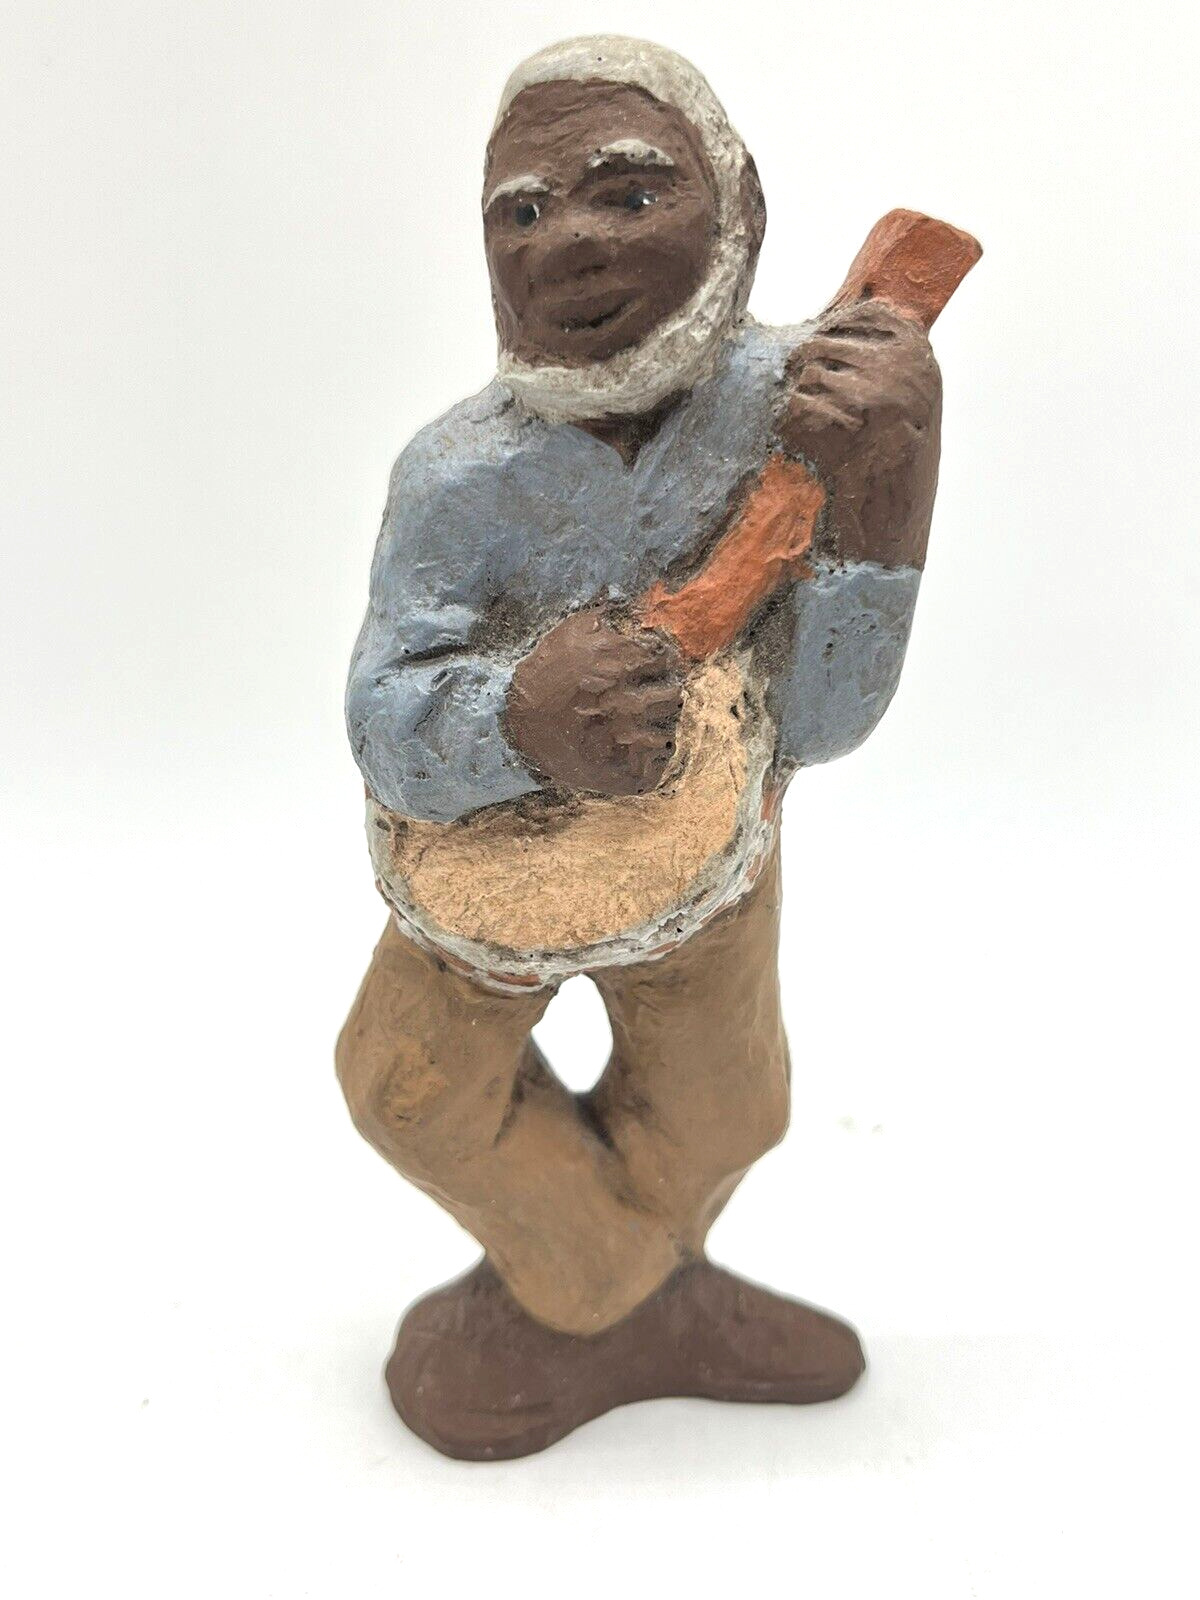 Black Americana Folk Art Man with Banjo Sculpture 1985 Don Ephraim Press Wood